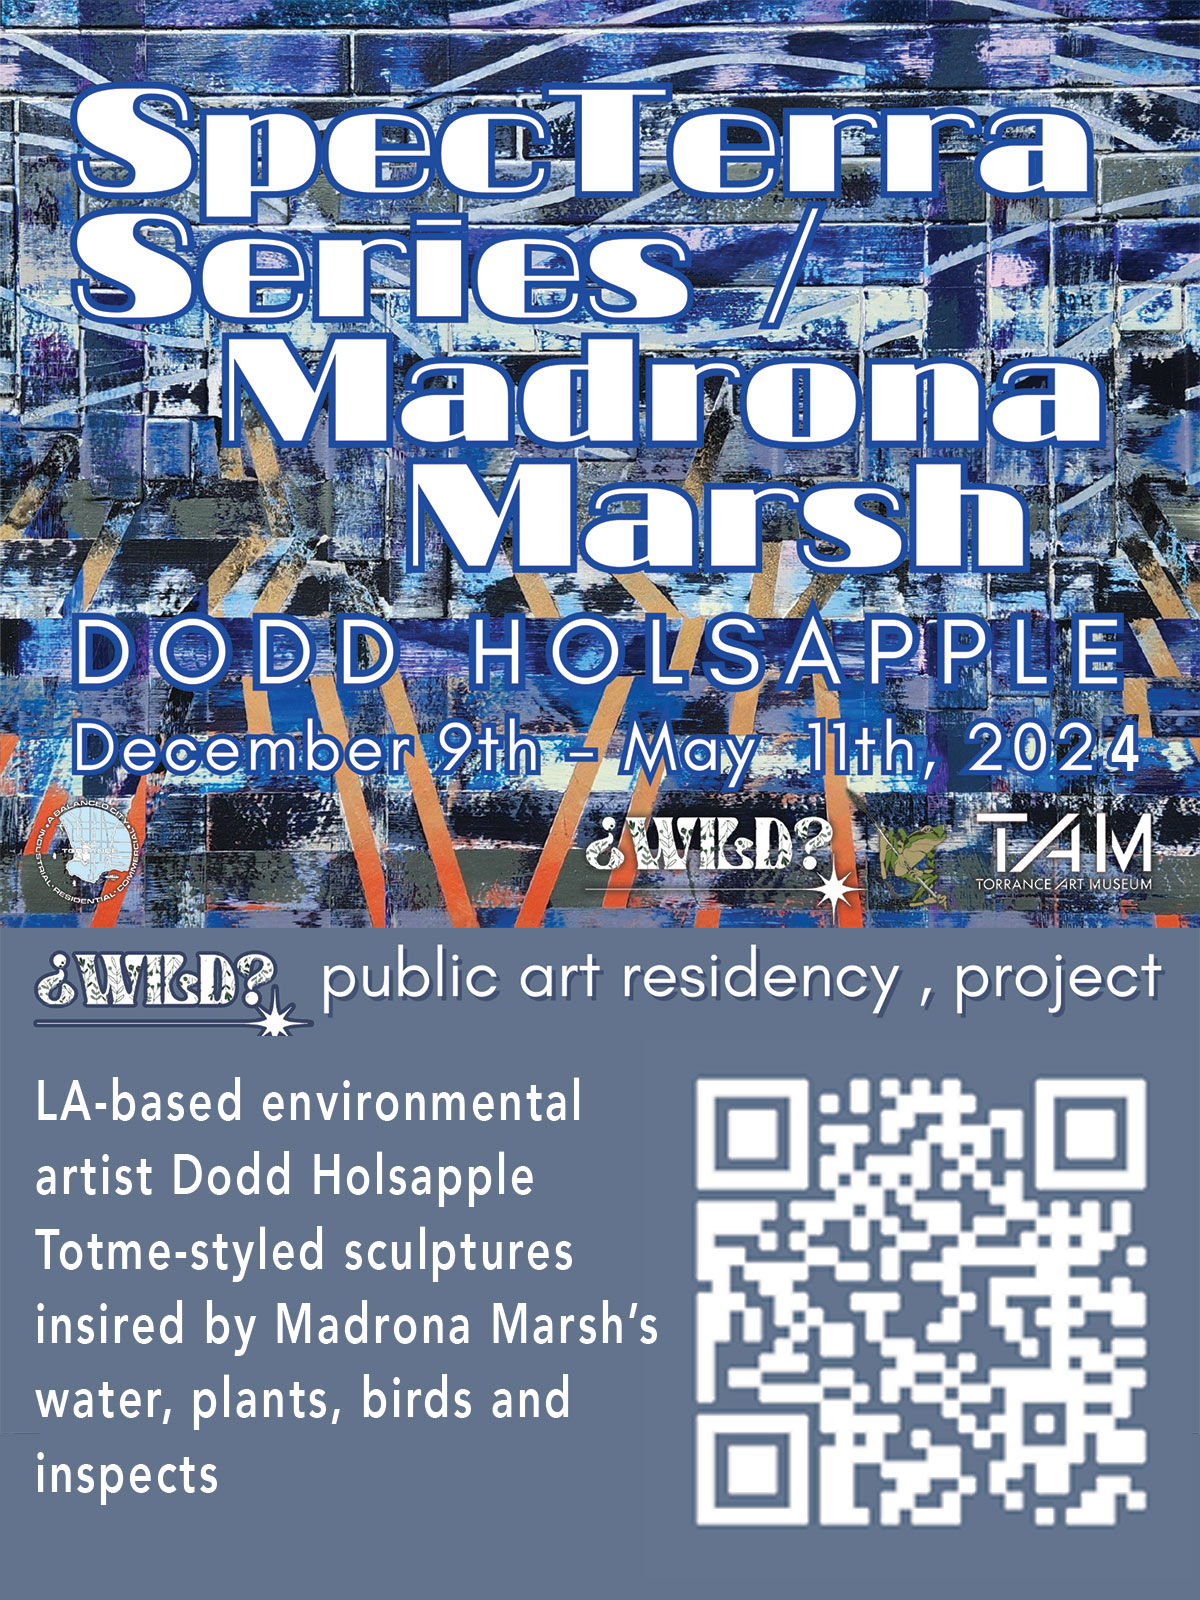 WILD SpecTerra project showcase at Madrona Marsh